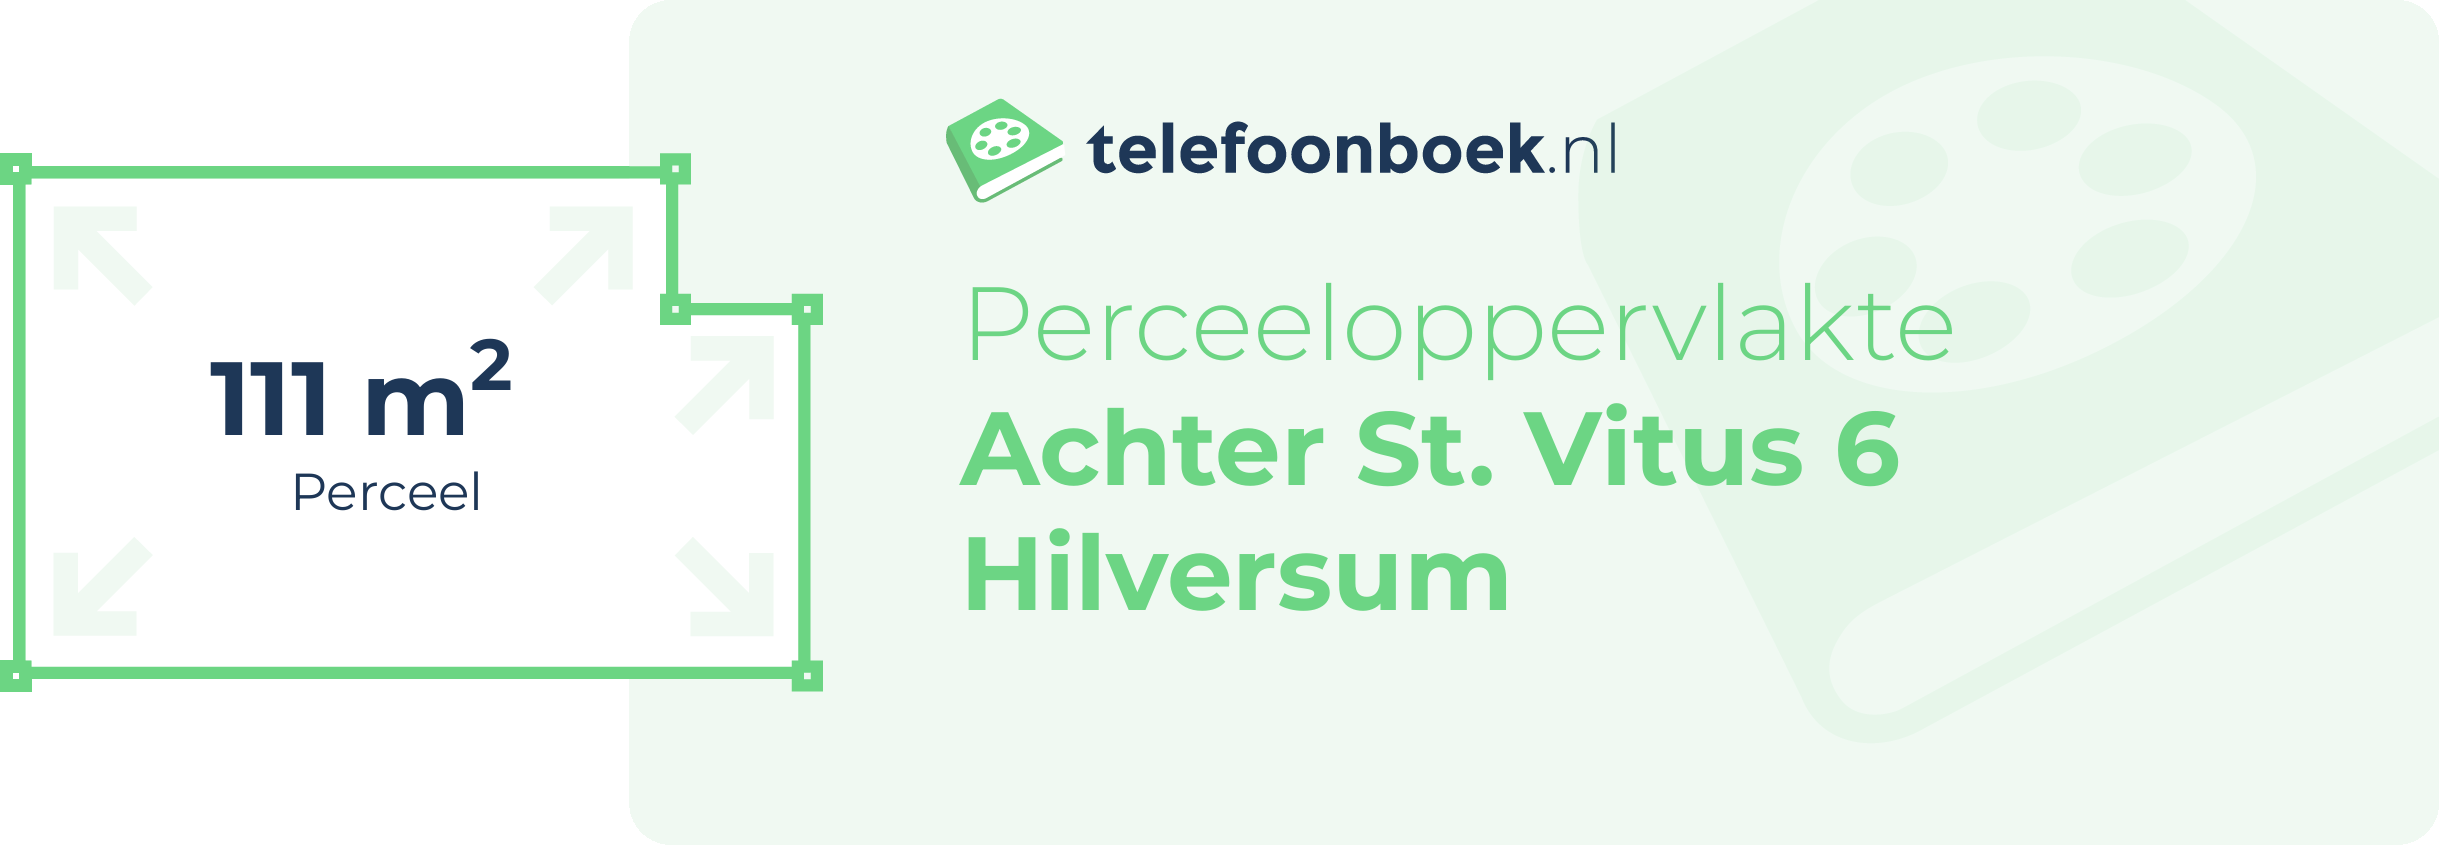 Perceeloppervlakte Achter St. Vitus 6 Hilversum